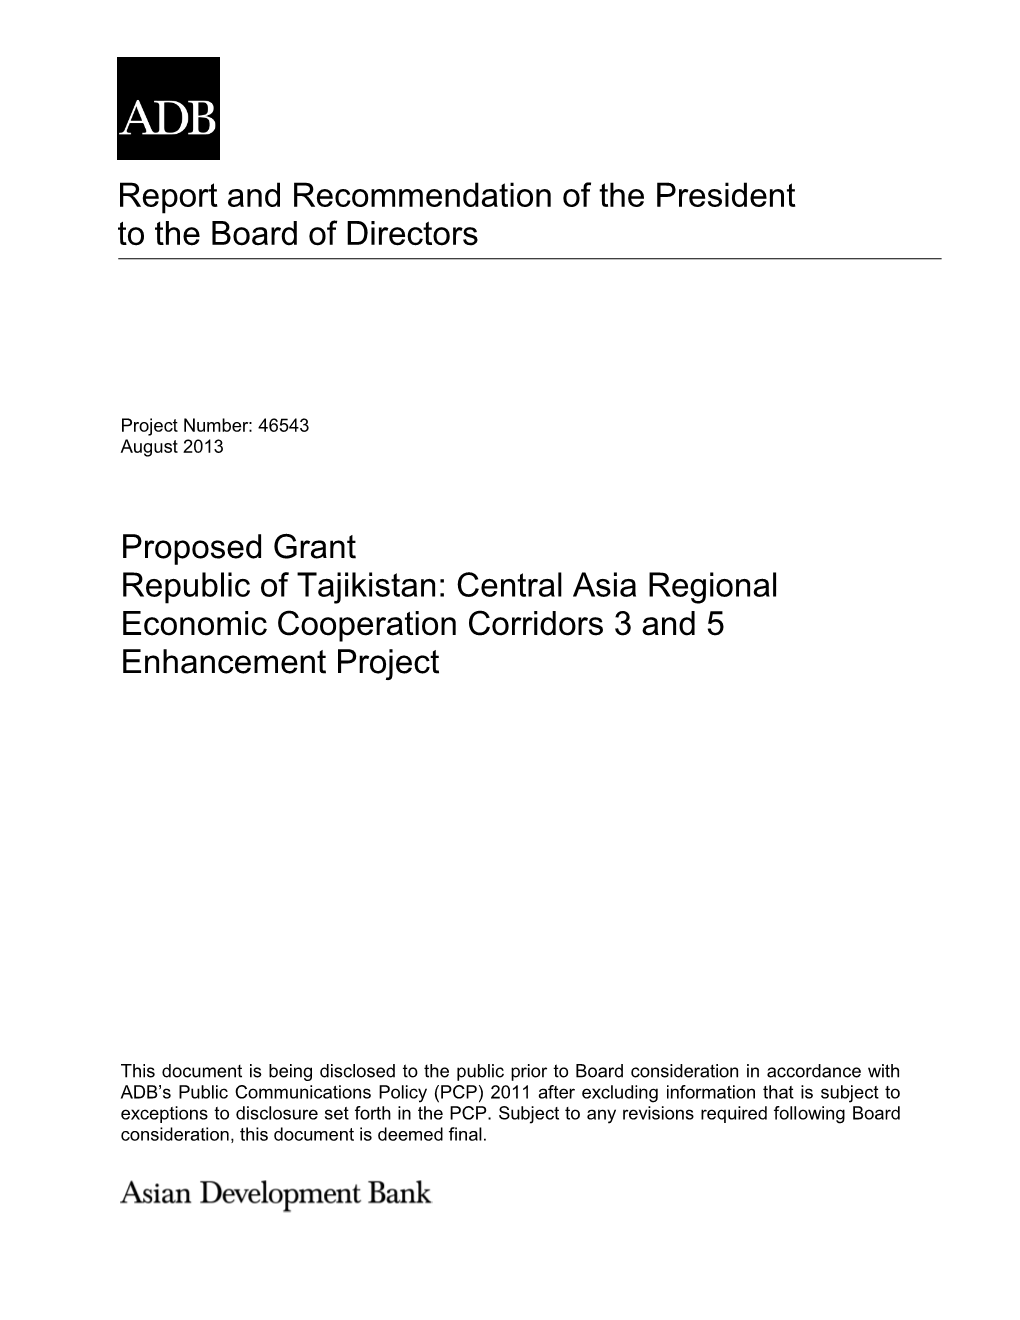 RRP: Tajikistan: Central Asia Regional Economic Cooperation